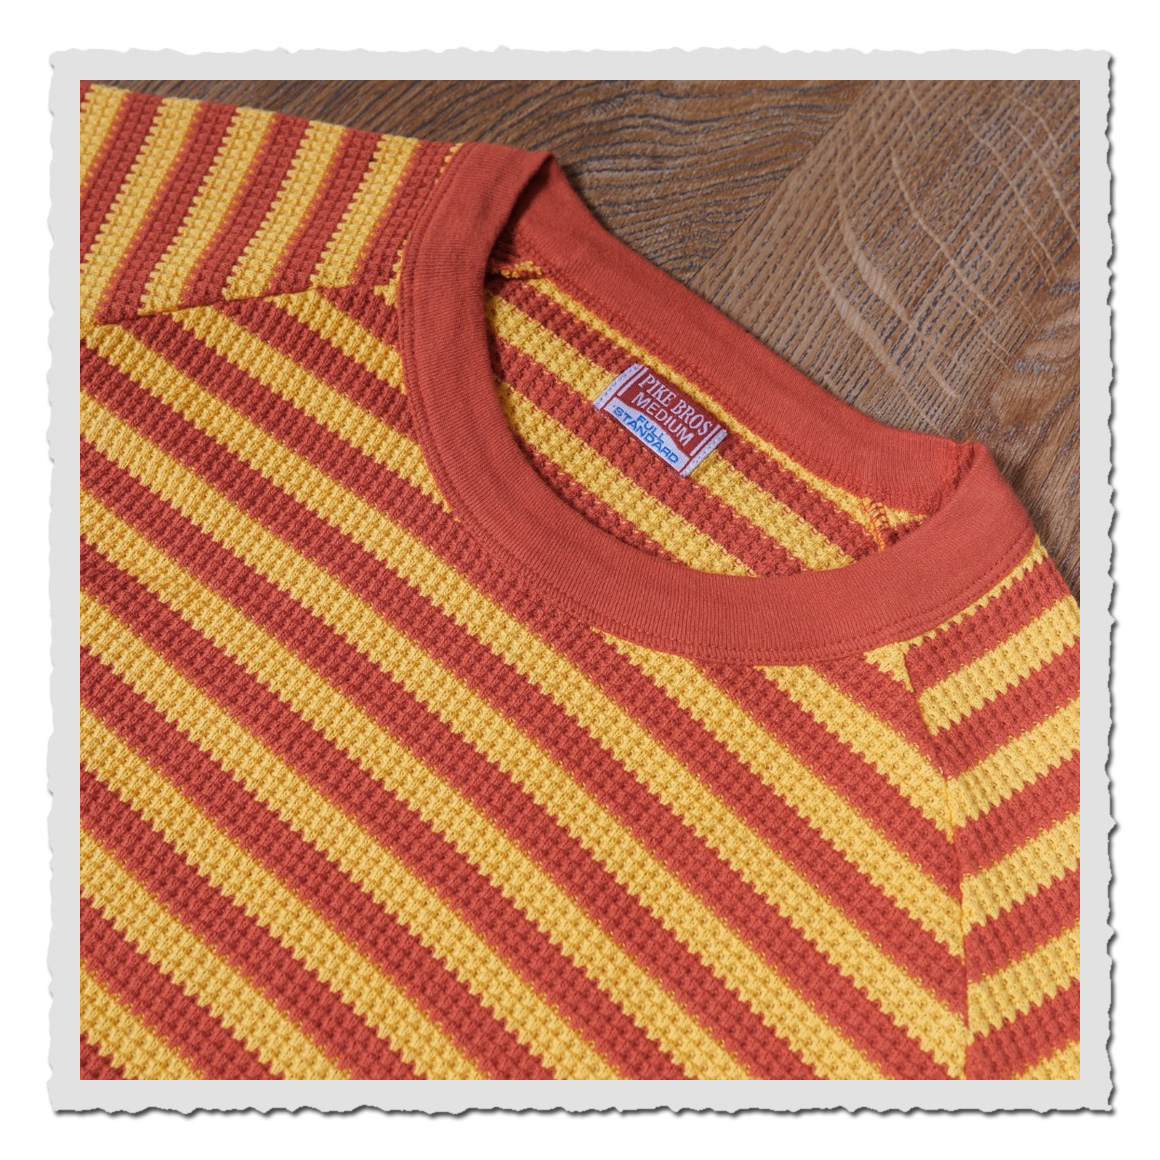 1967 Waffle Shirt Ventura orange